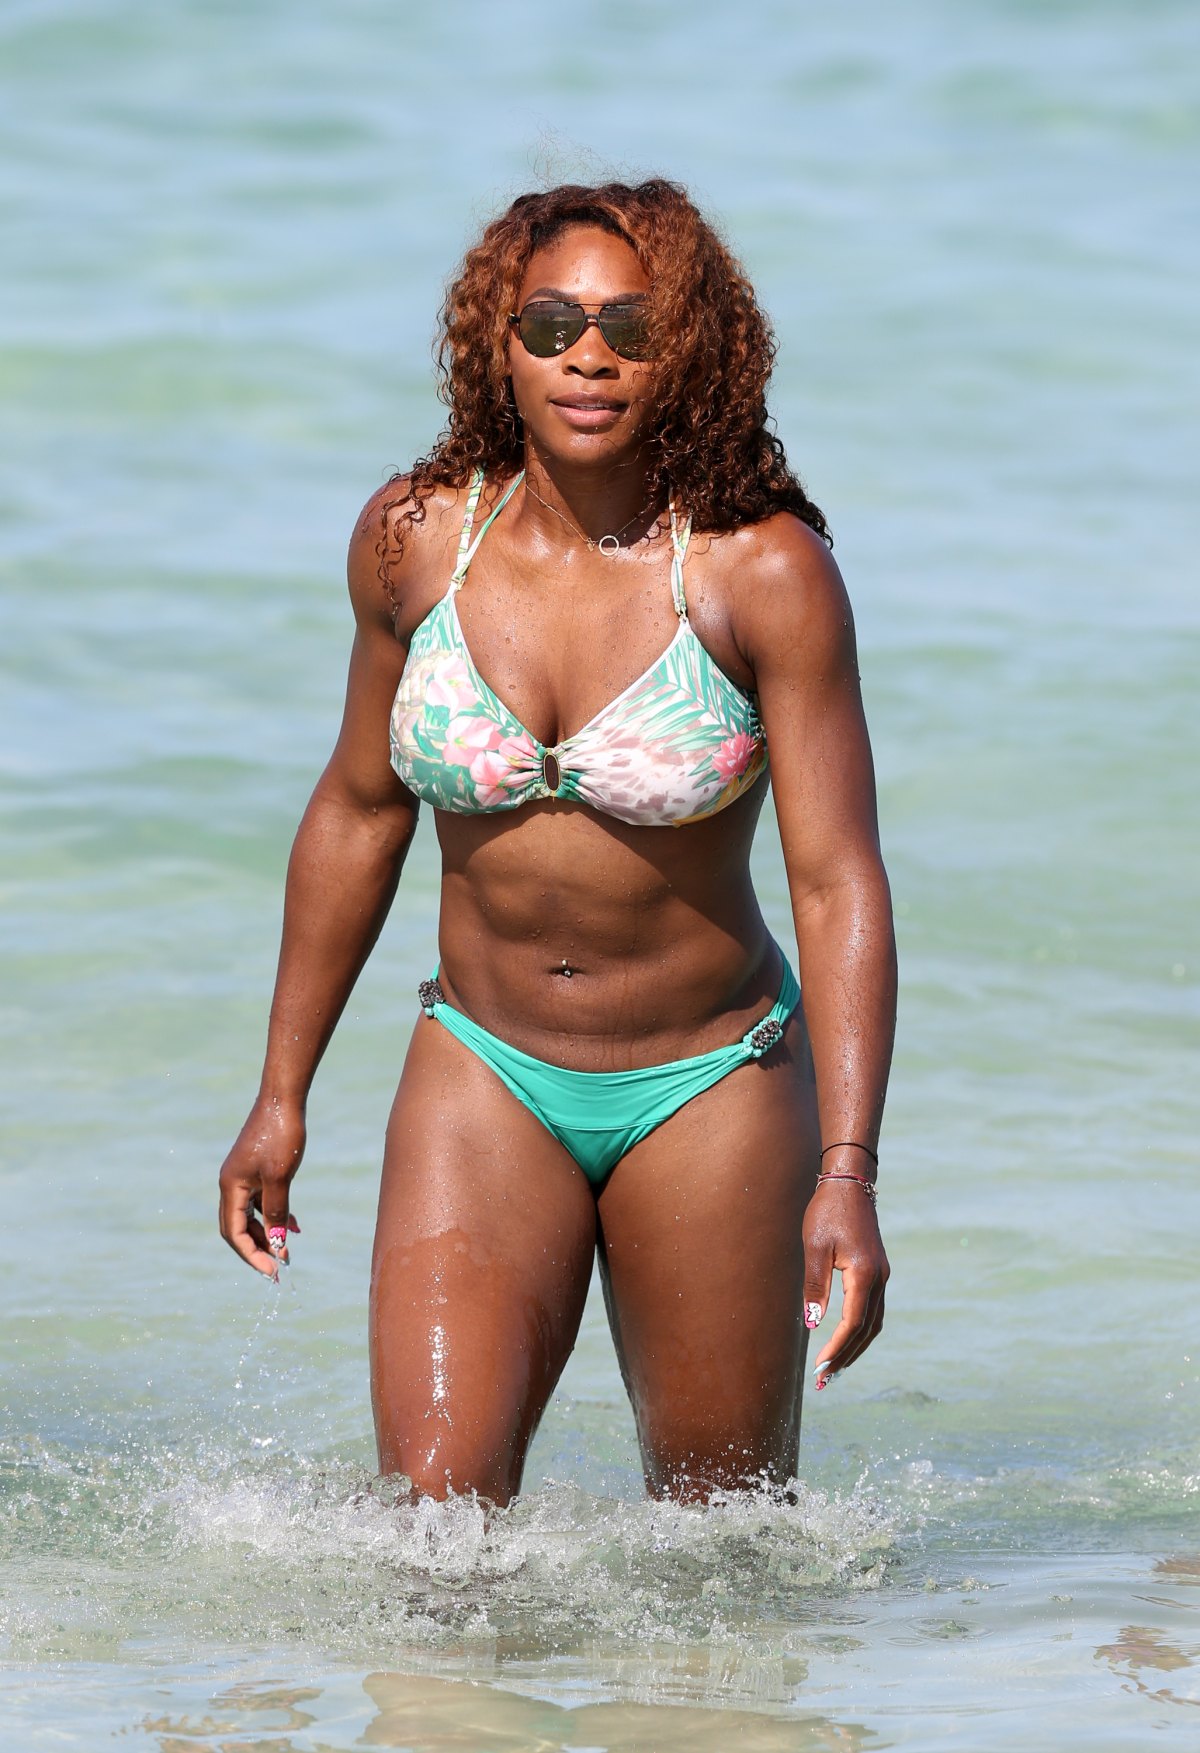 invernadero Mortal Inevitable Serena Williams Bikini Pictures: Her Hottest Swimsuit Photos